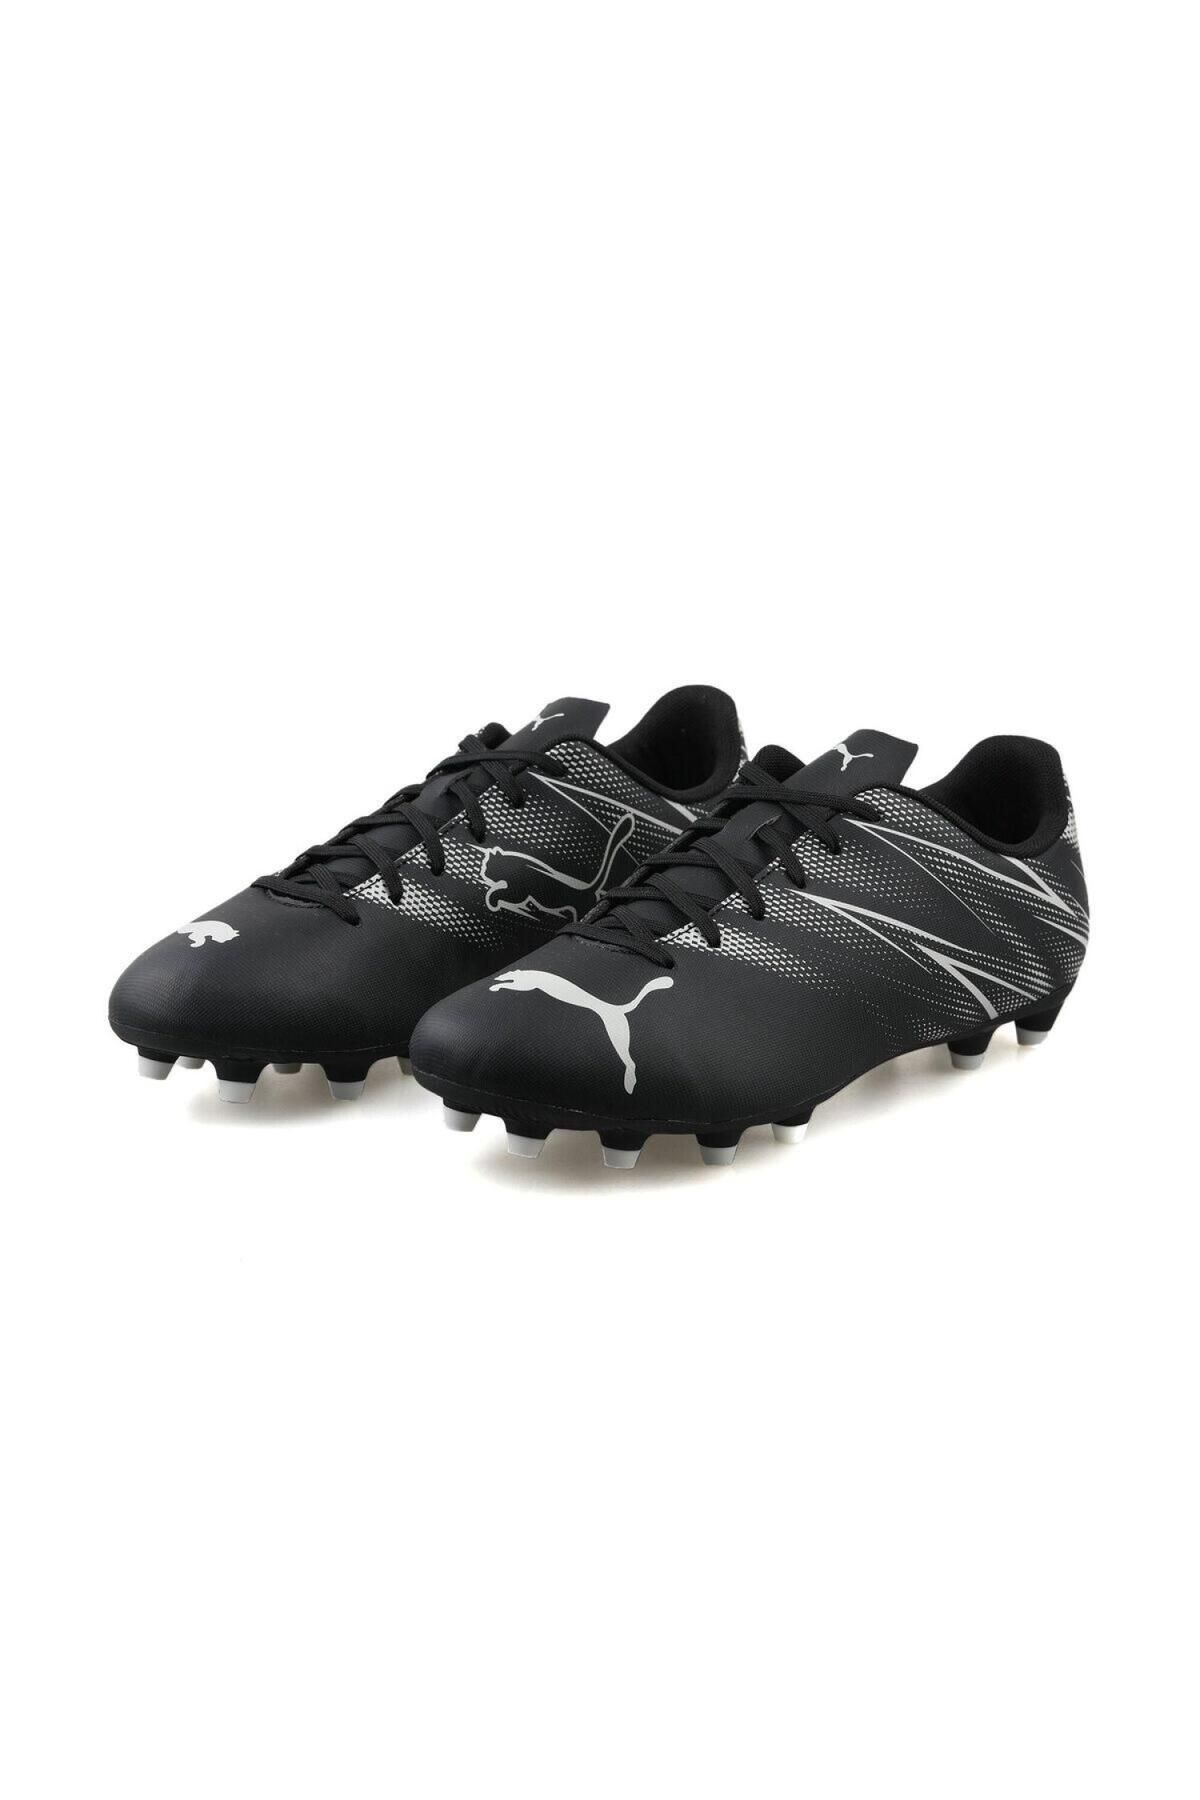 Puma Attacanto Fg/Ag Erkek Futbol Ayakkabısı Çim Zemin Kramponu Siyah